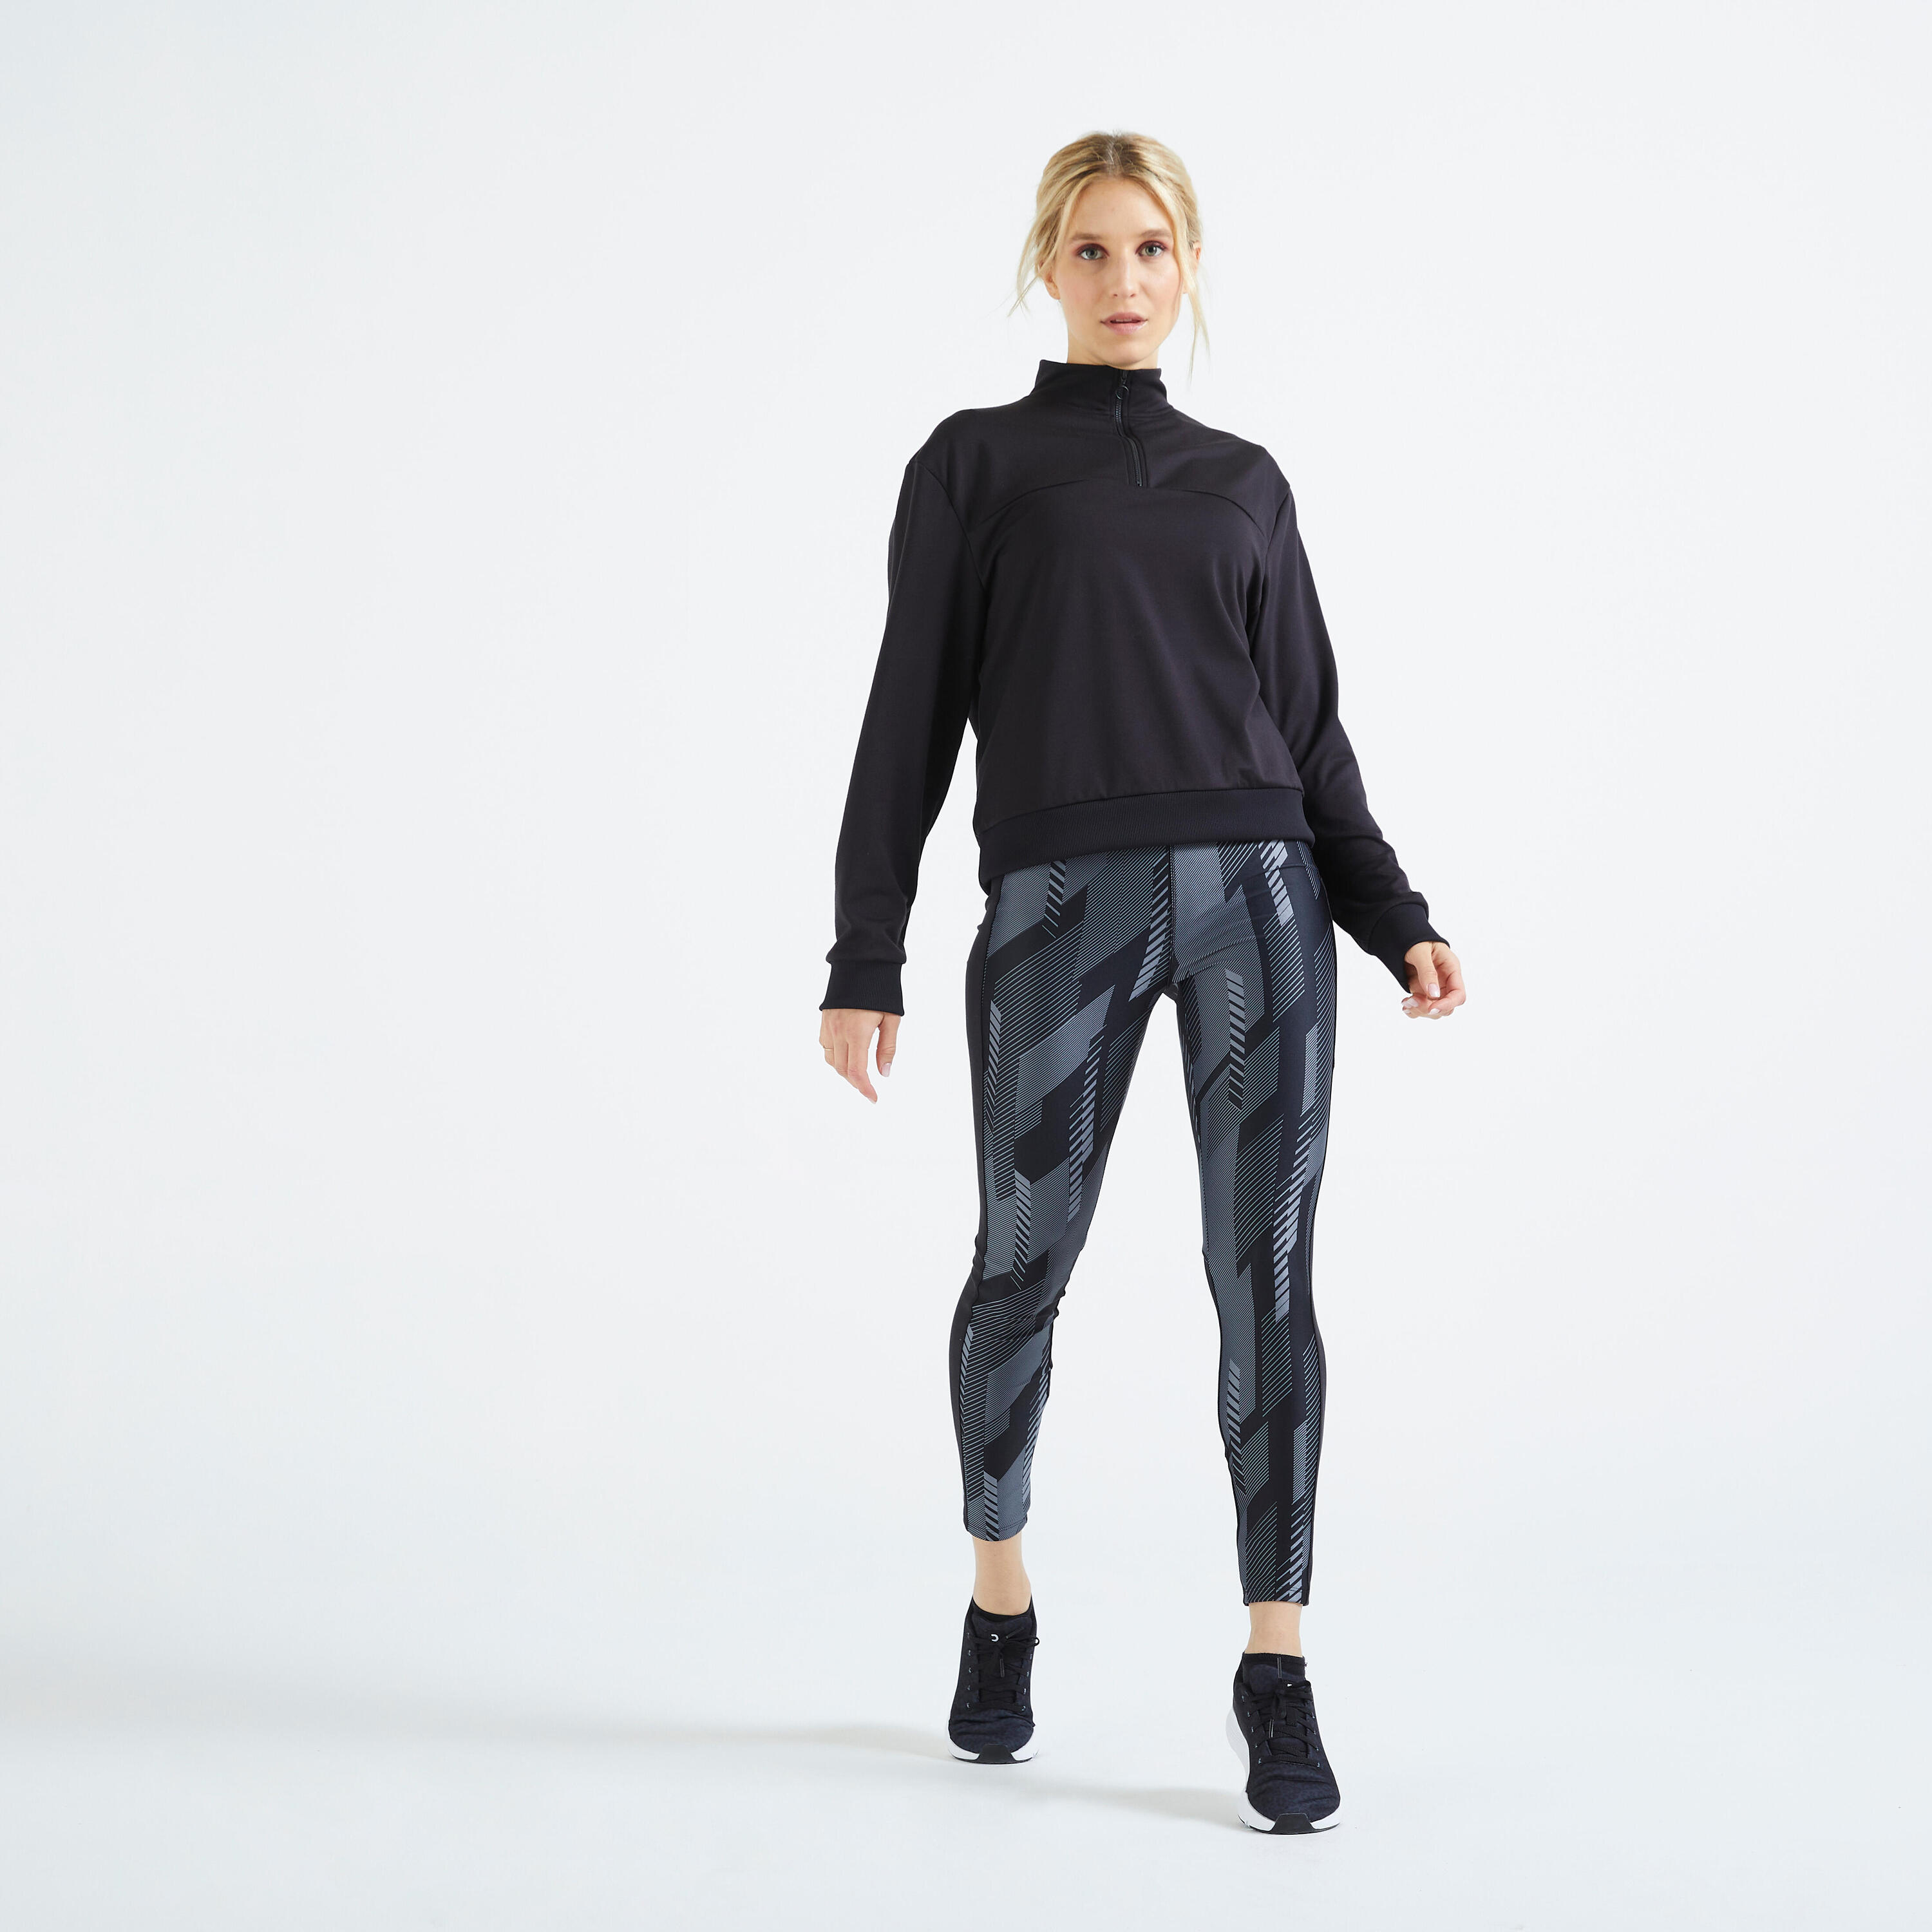 Women's Cropped Long-Sleeved Fitness Cardio Sweatshirt - Black 2/4